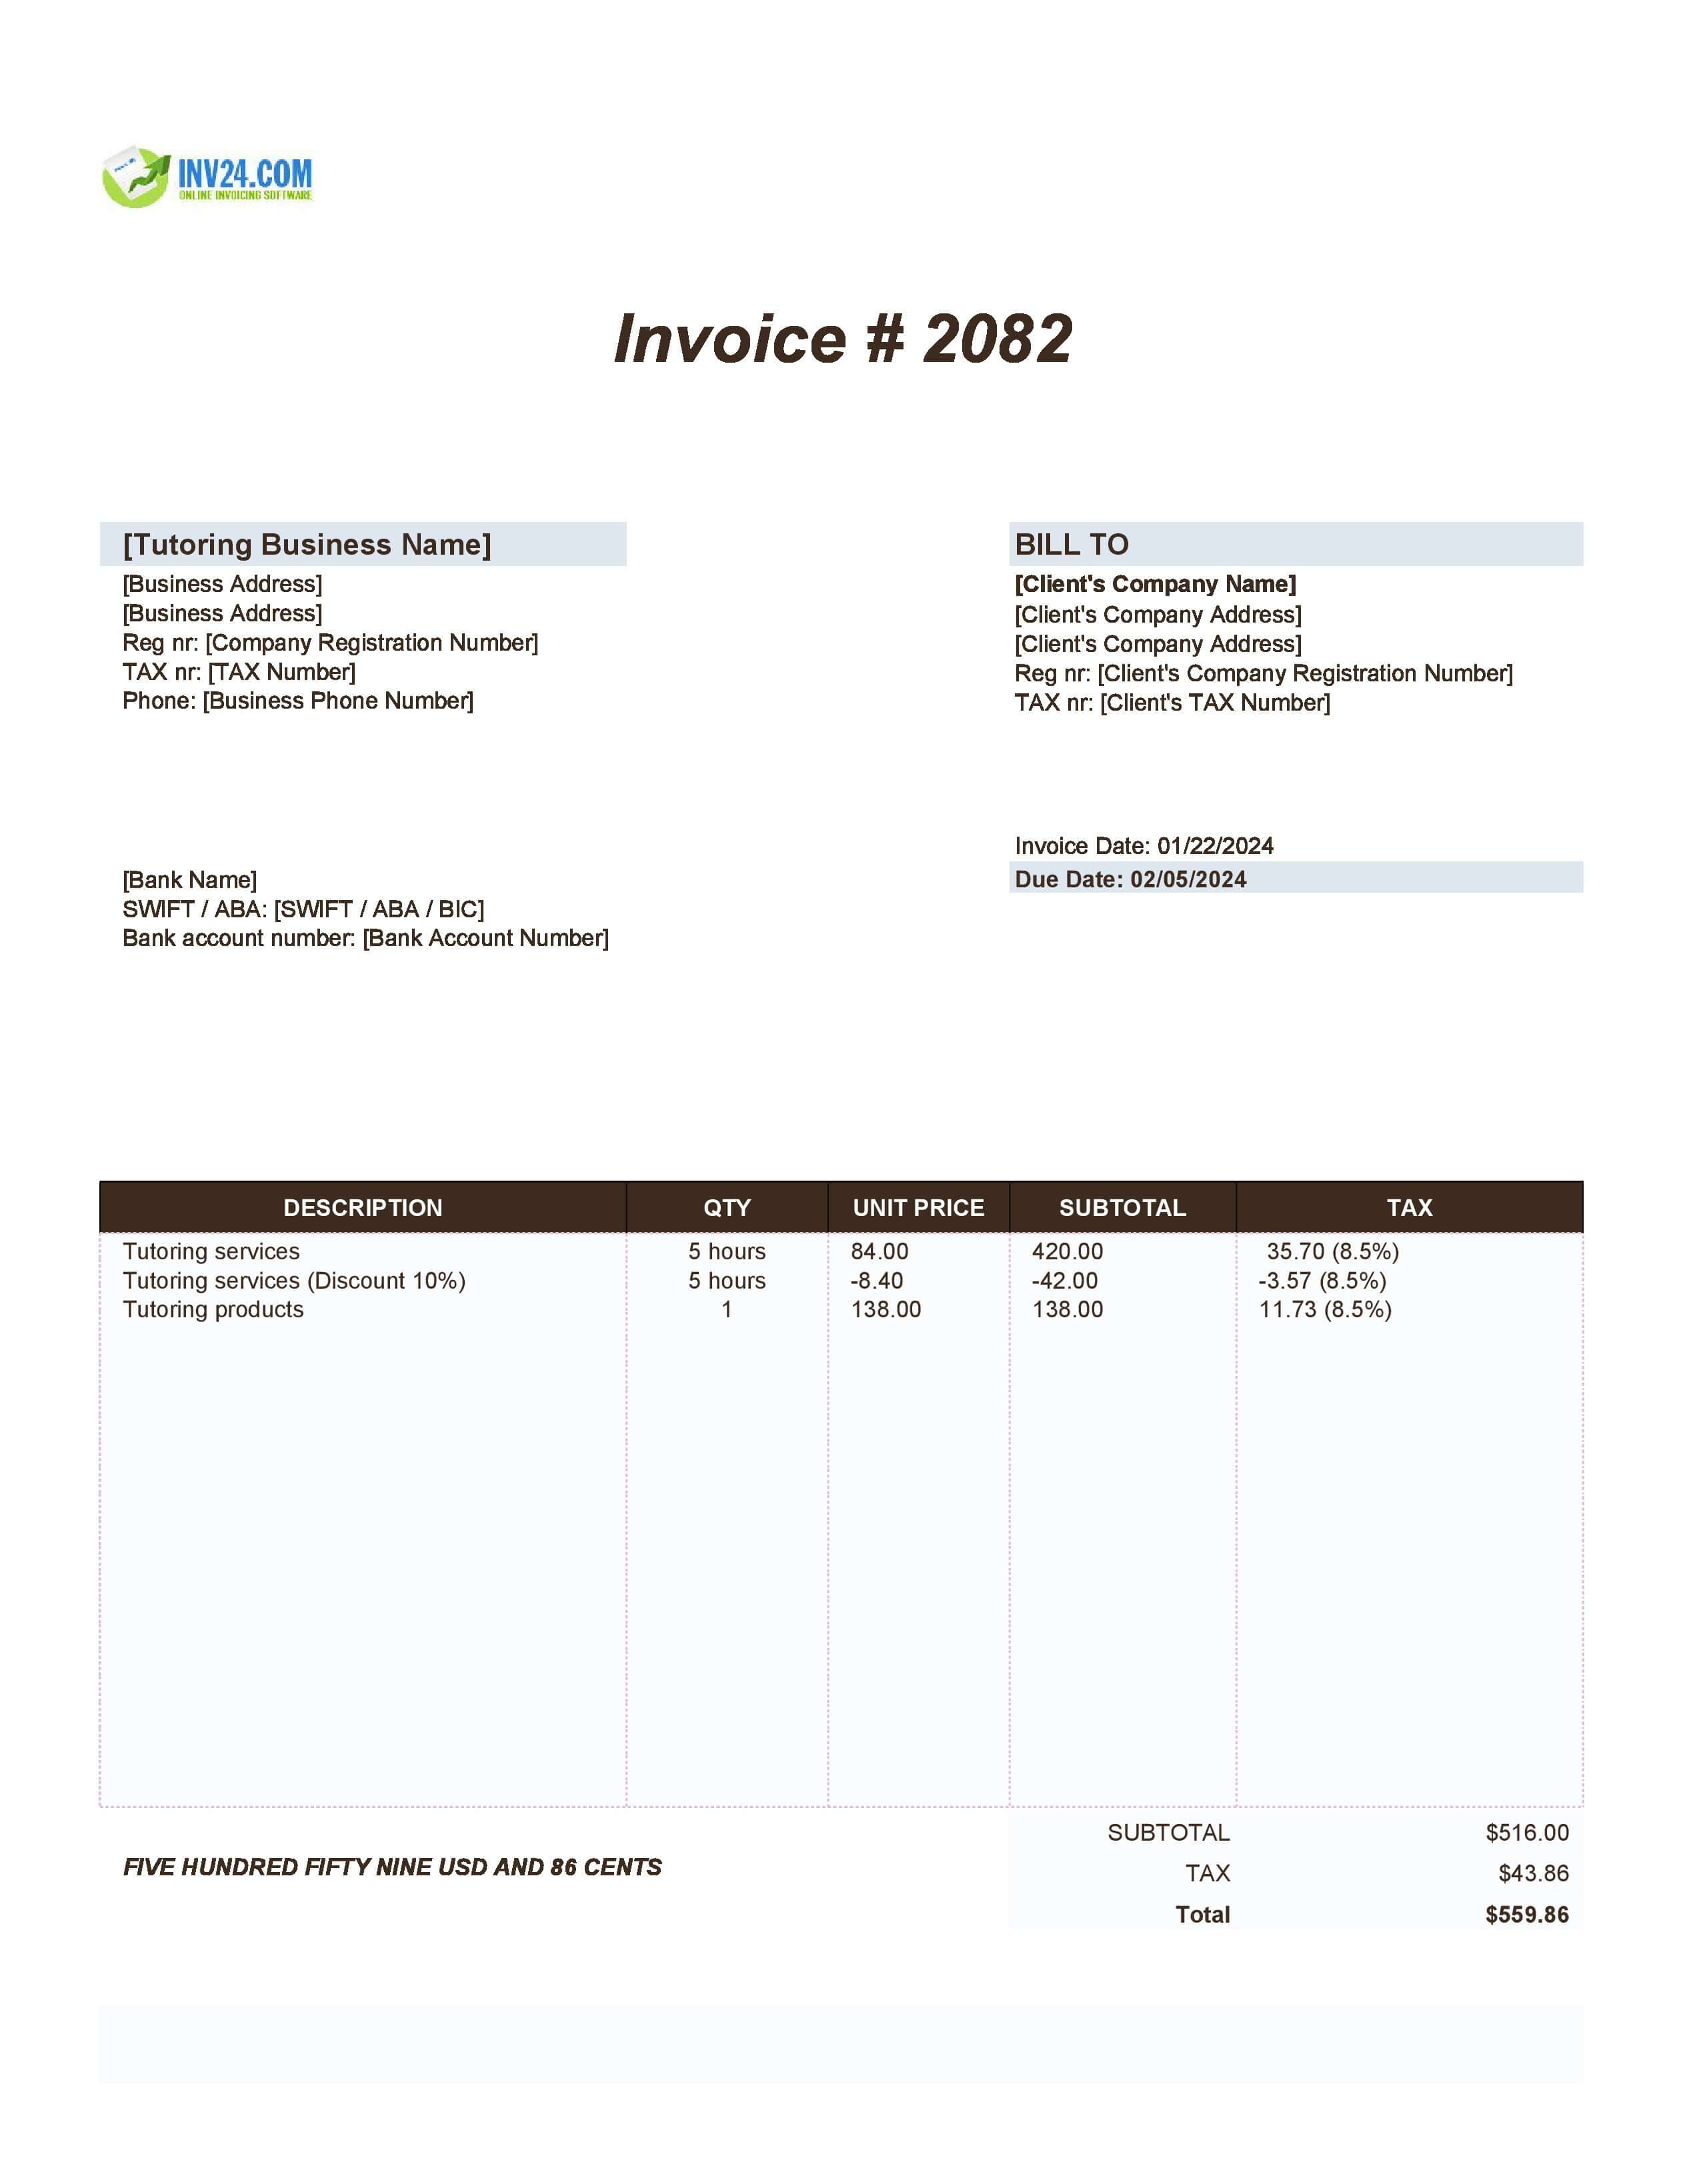 Tutoring invoice template